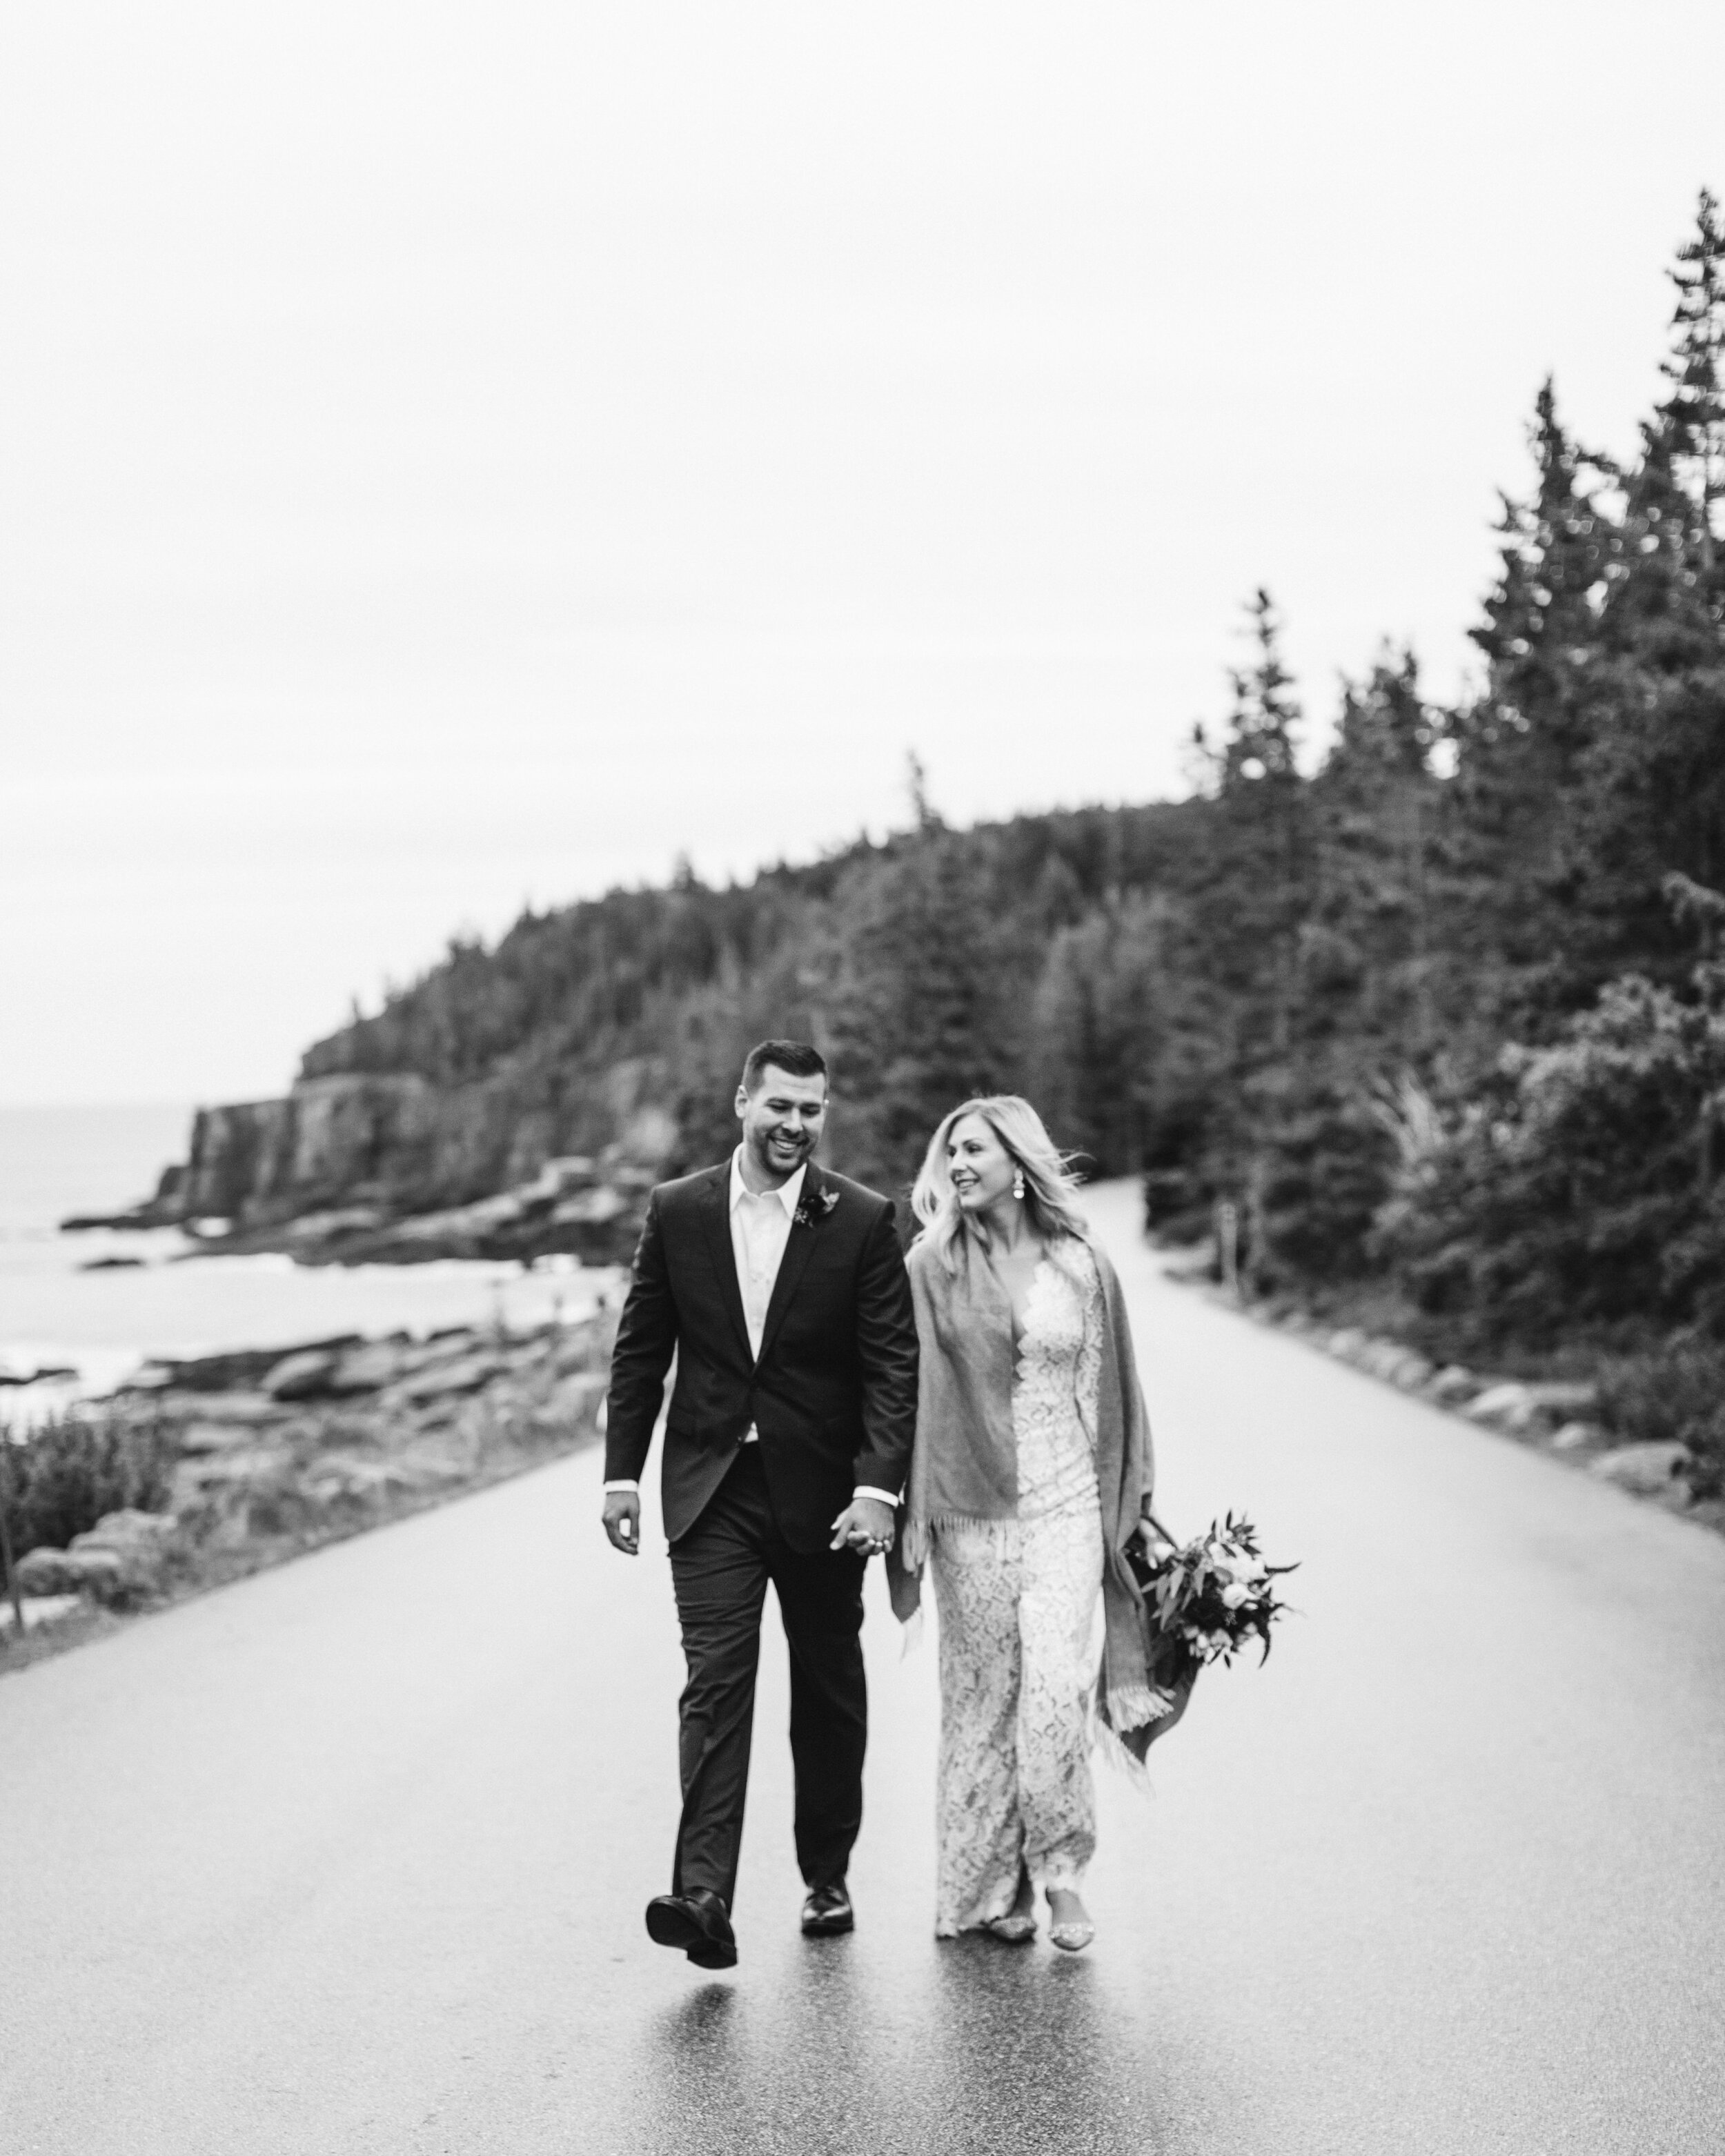 Nicole-Daacke-Photography-Acadia-national-park-elopement-photography-elopement-in-acadia-inspiration-maine-intimate-wedding-destination-elopement-photographer-rainy-day-maine-coast-bar-harbor-elopement-photography-171.jpg